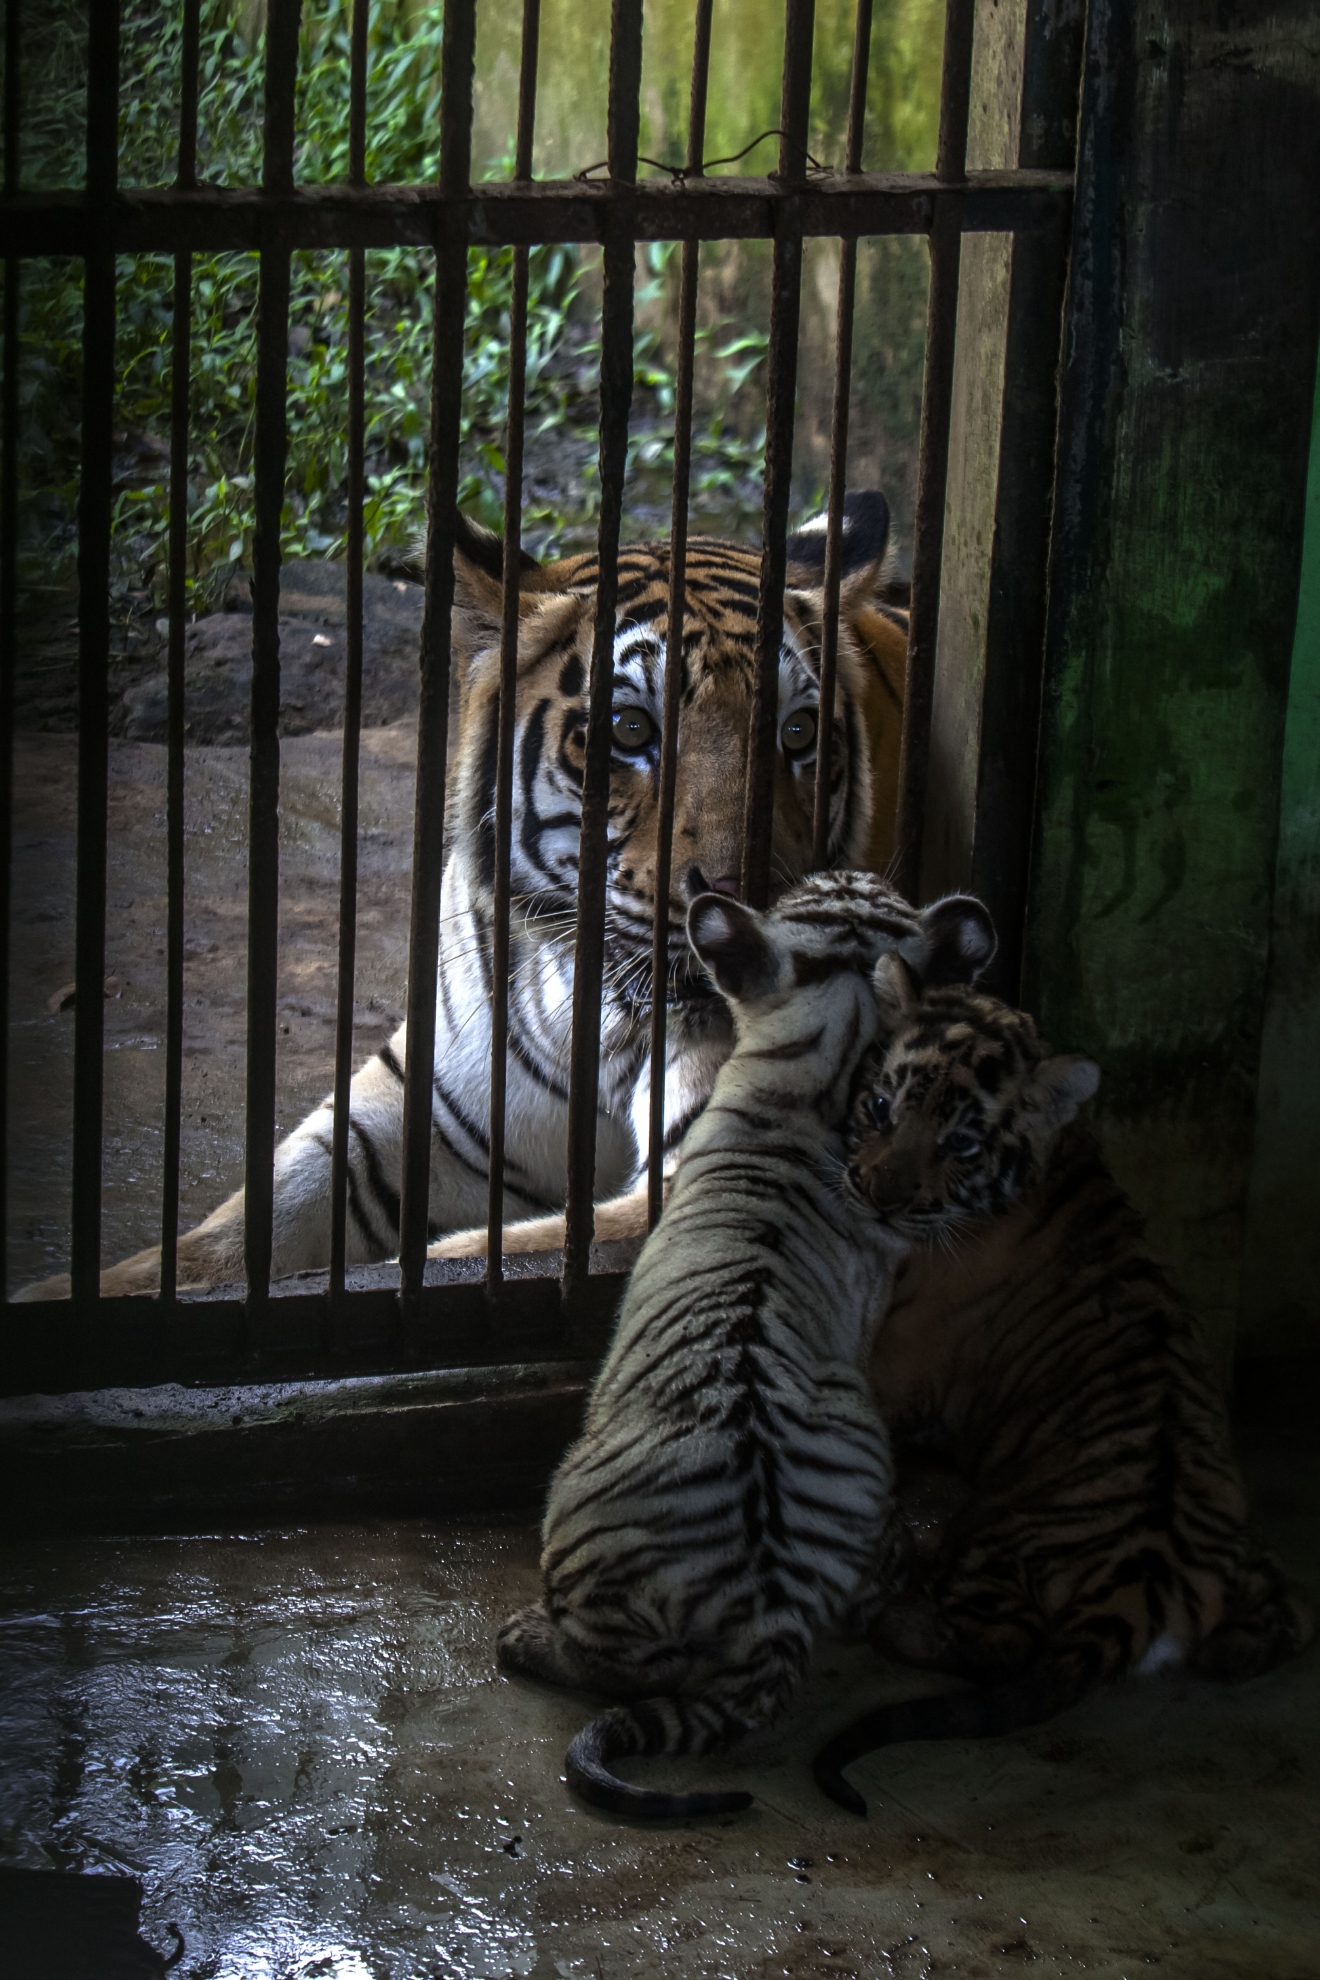 PHOTOS | Newborn Bengal tiger cubs revealed at Indonesian zoo | WJLA